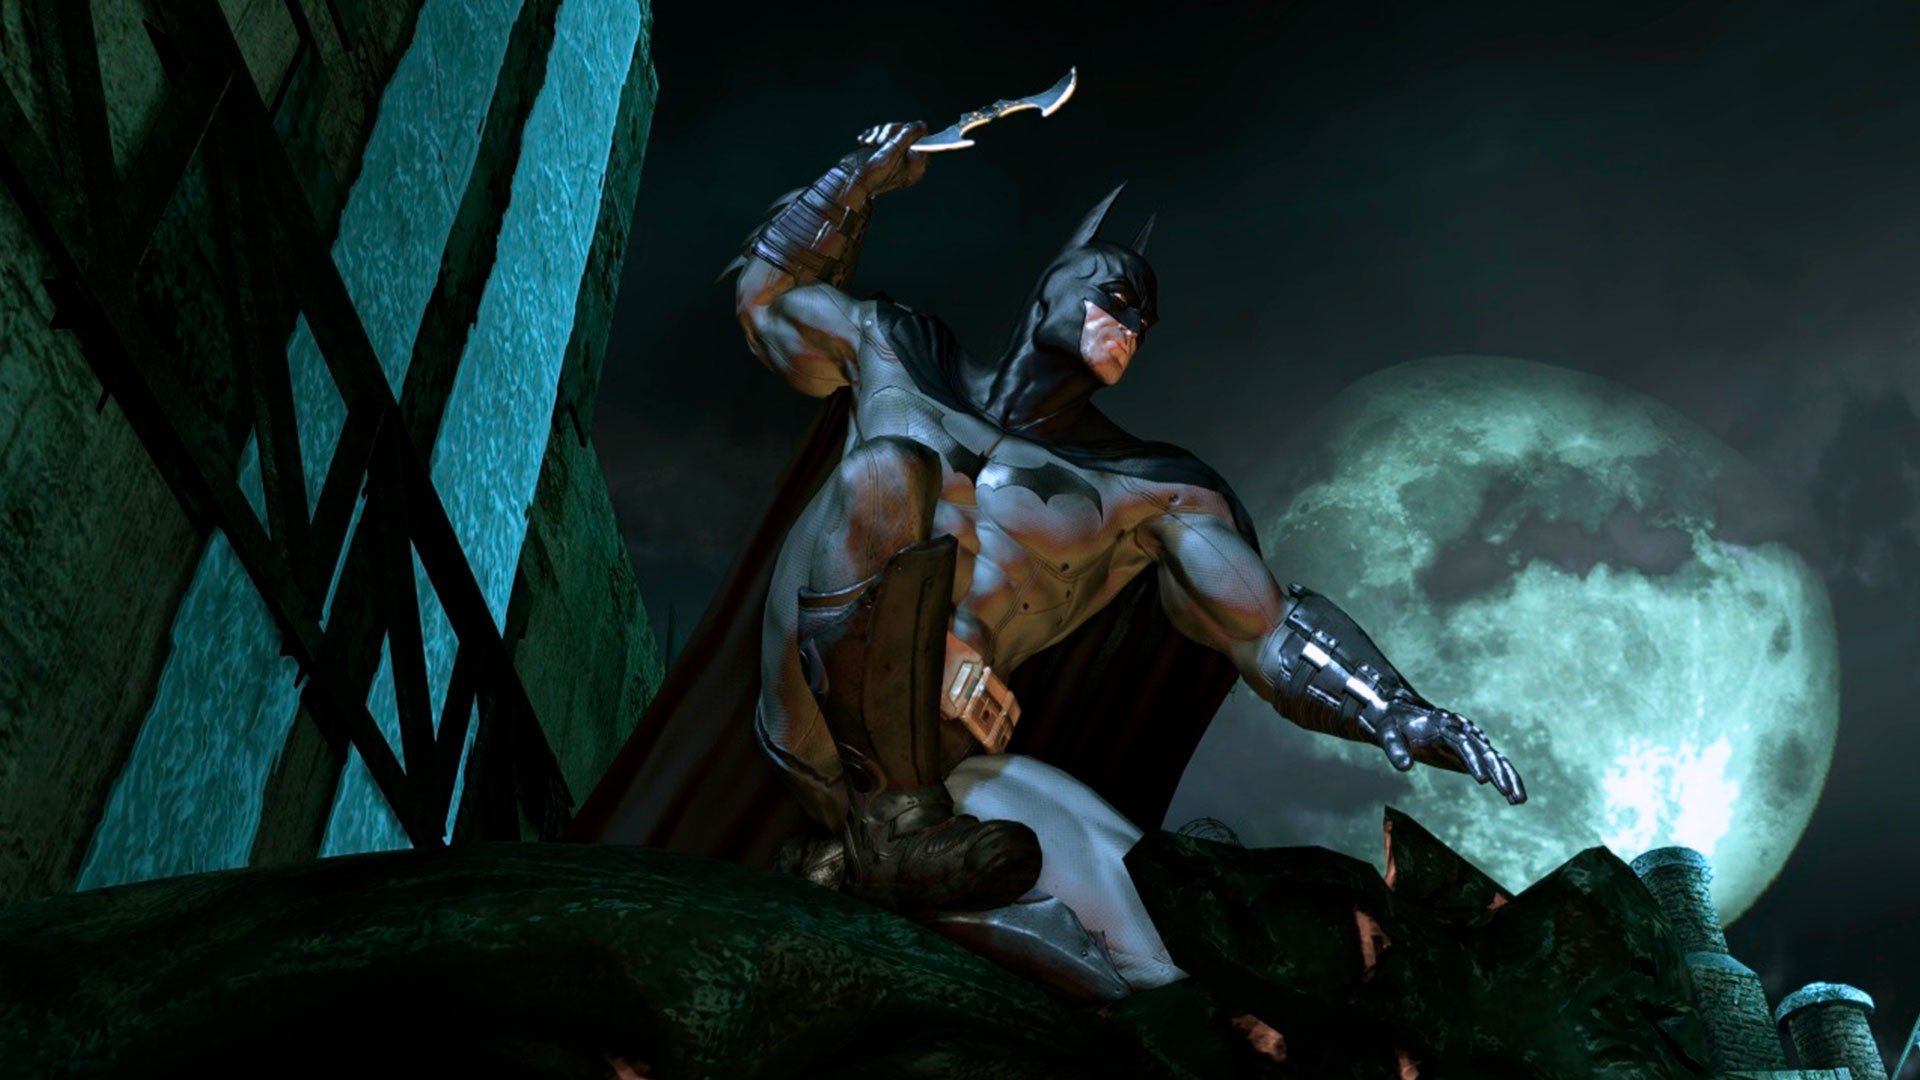 Communauté Steam :: Guide :: Guia de Conquistas: Batman Arkham Asylum  [PT-BR]